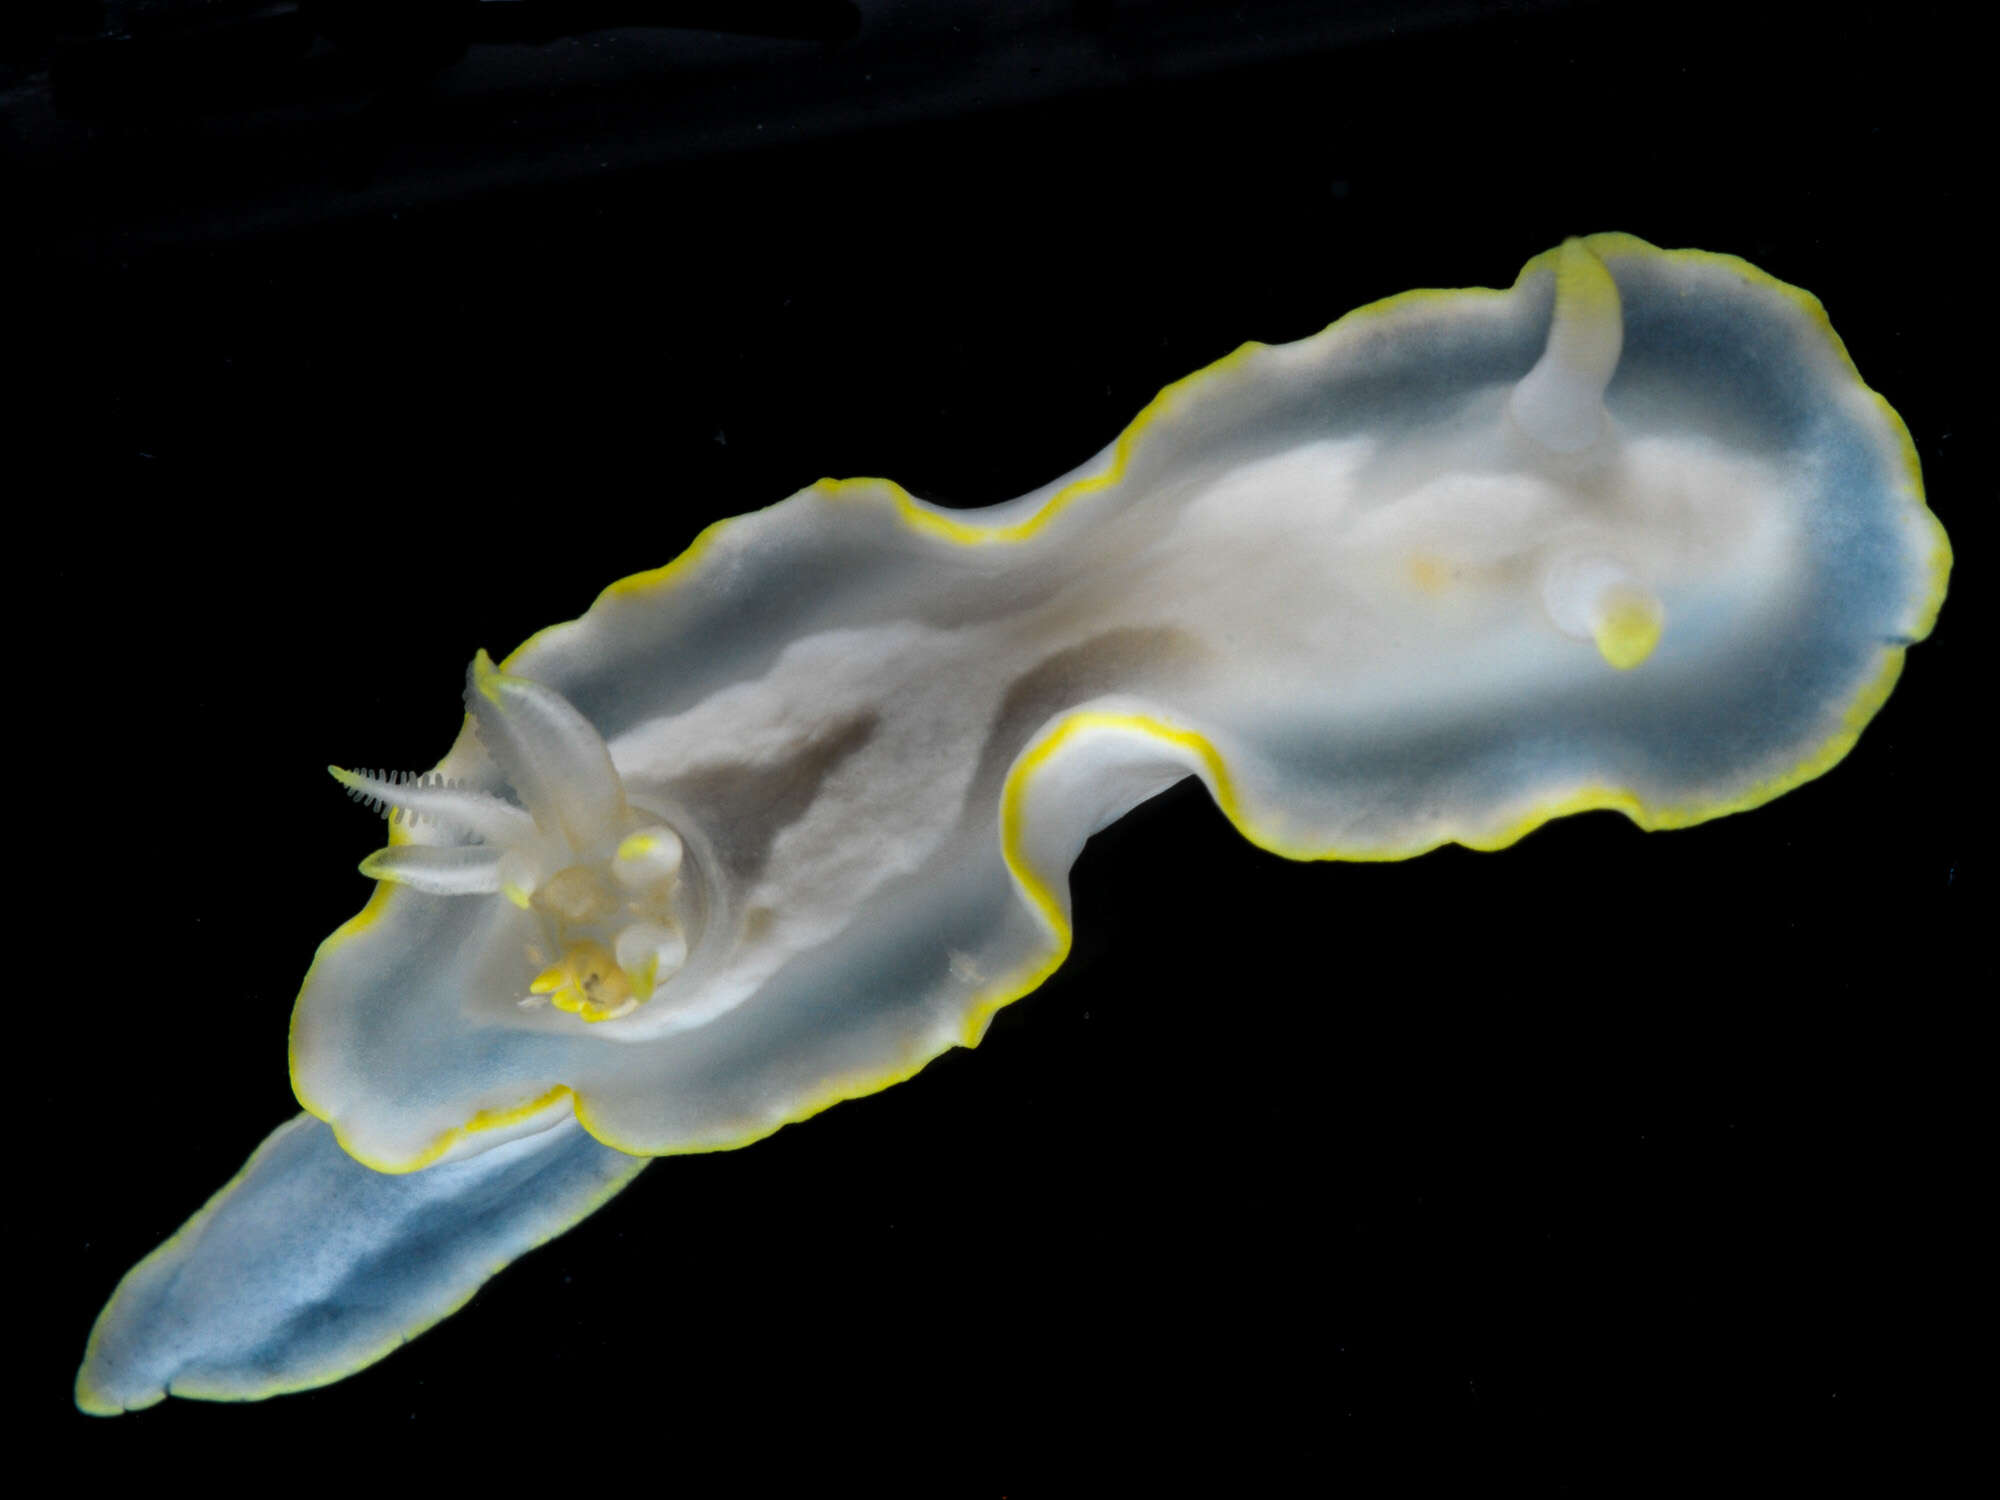 Image of Pale white slug